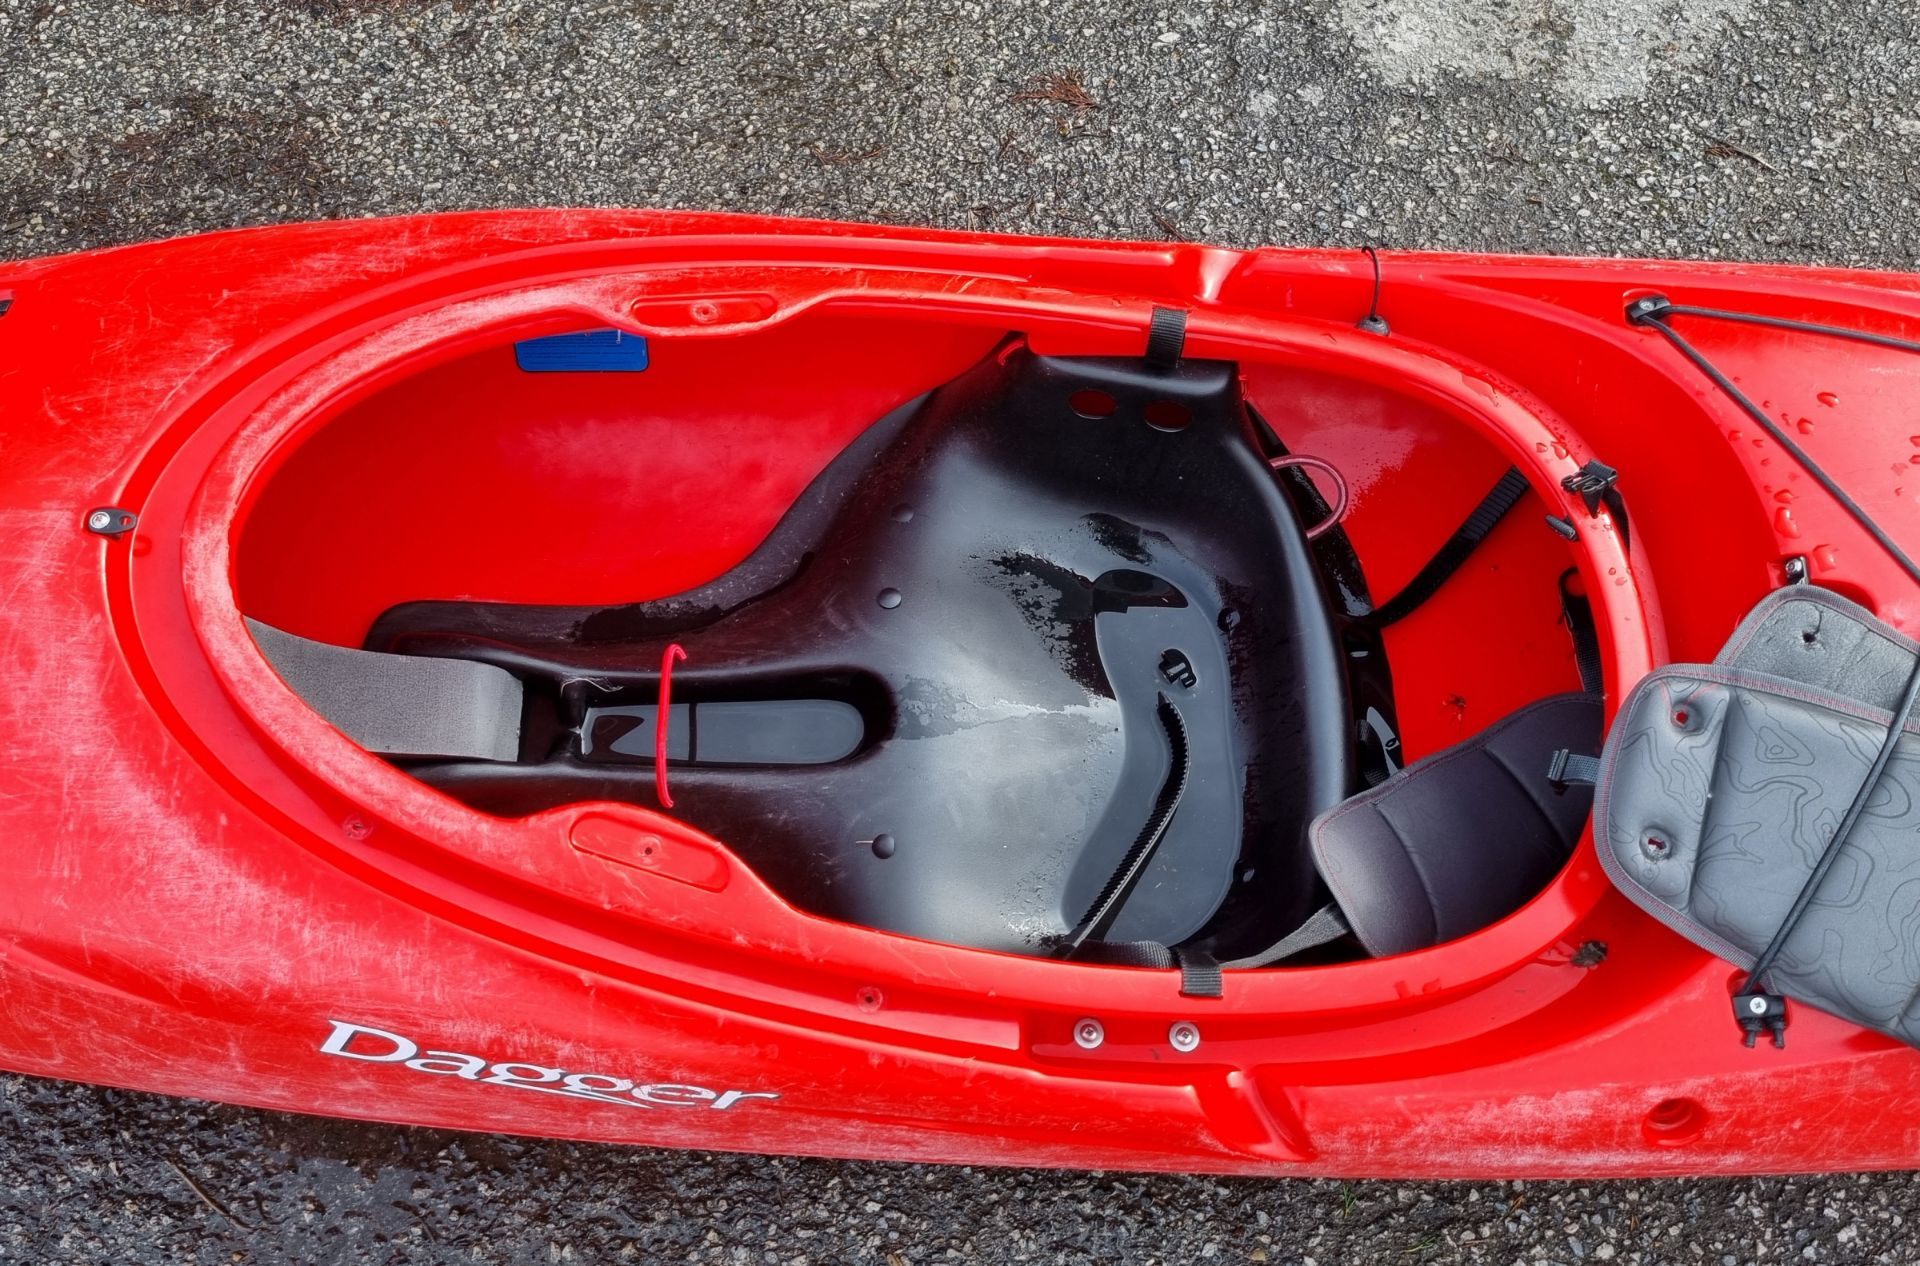 Dagger Katana polyethylene kayak - red - W 3200 x D 660 x H 420mm - Image 4 of 9